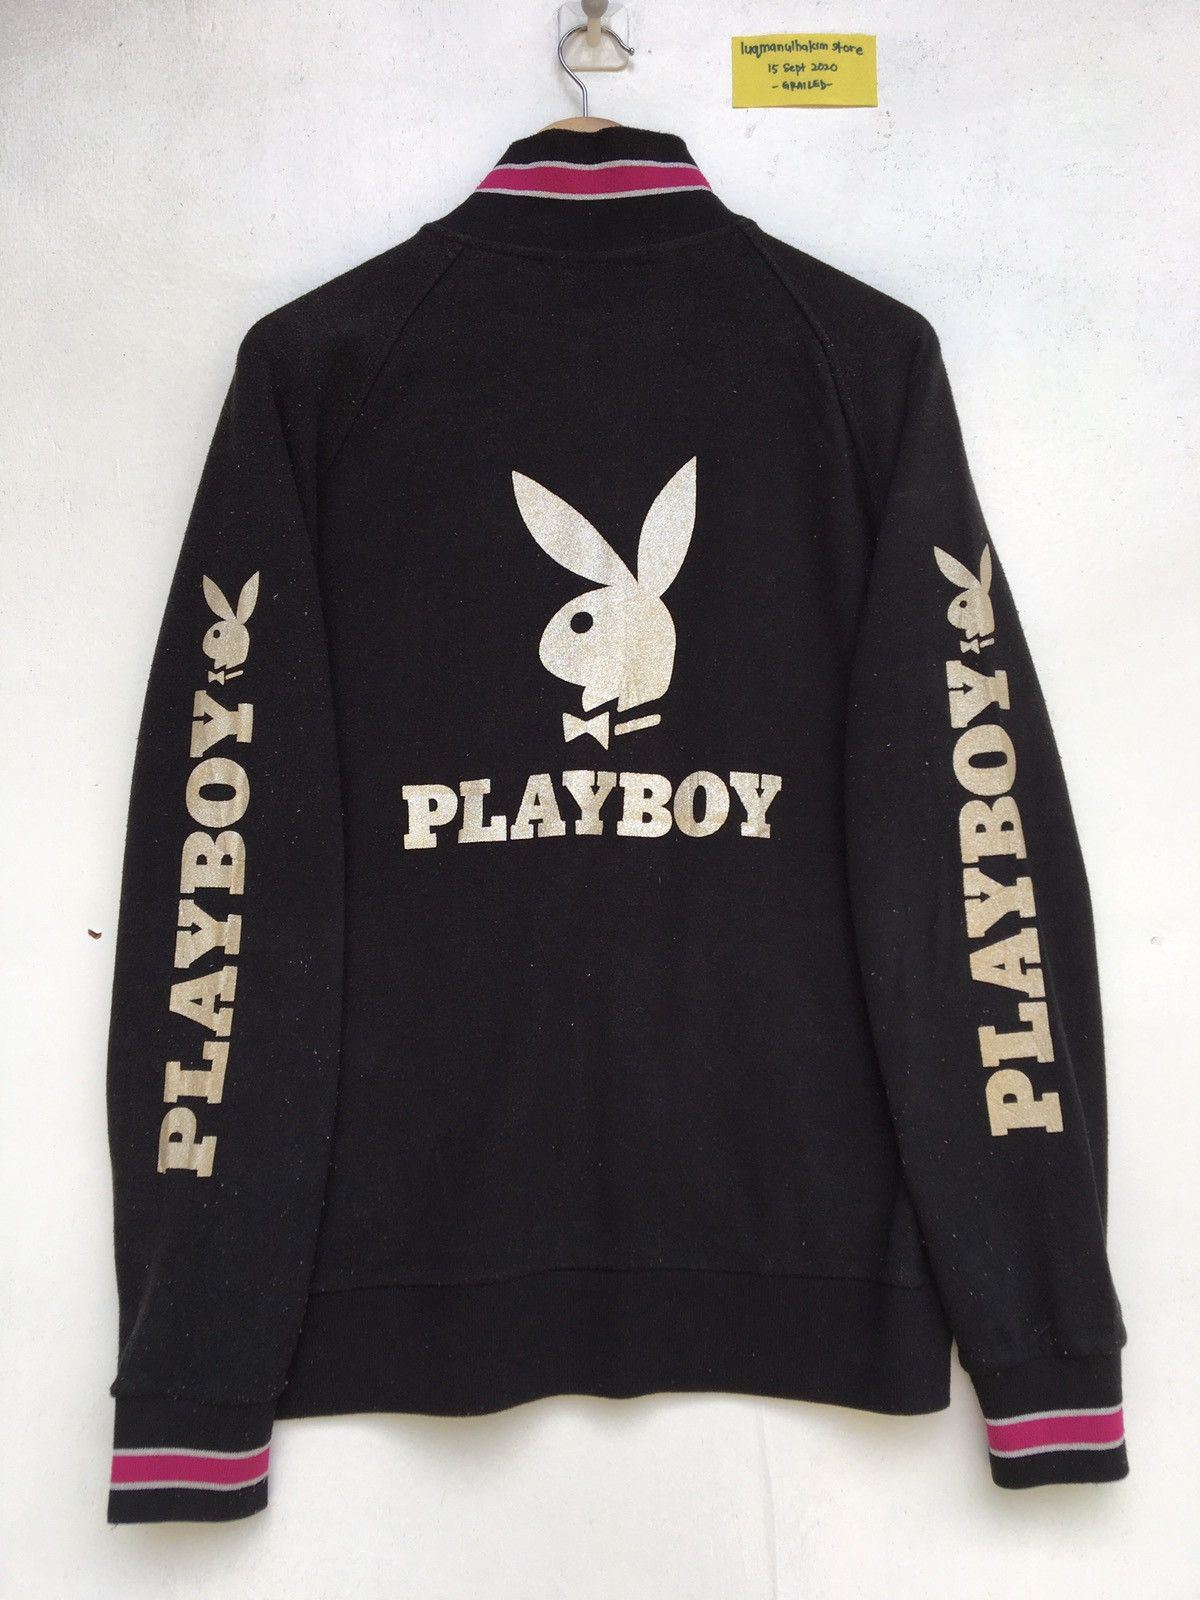 Vintage Rare Playboy Big Logo Spellout Zip Up Sweater Size US L / EU 52-54 / 3 - 2 Preview